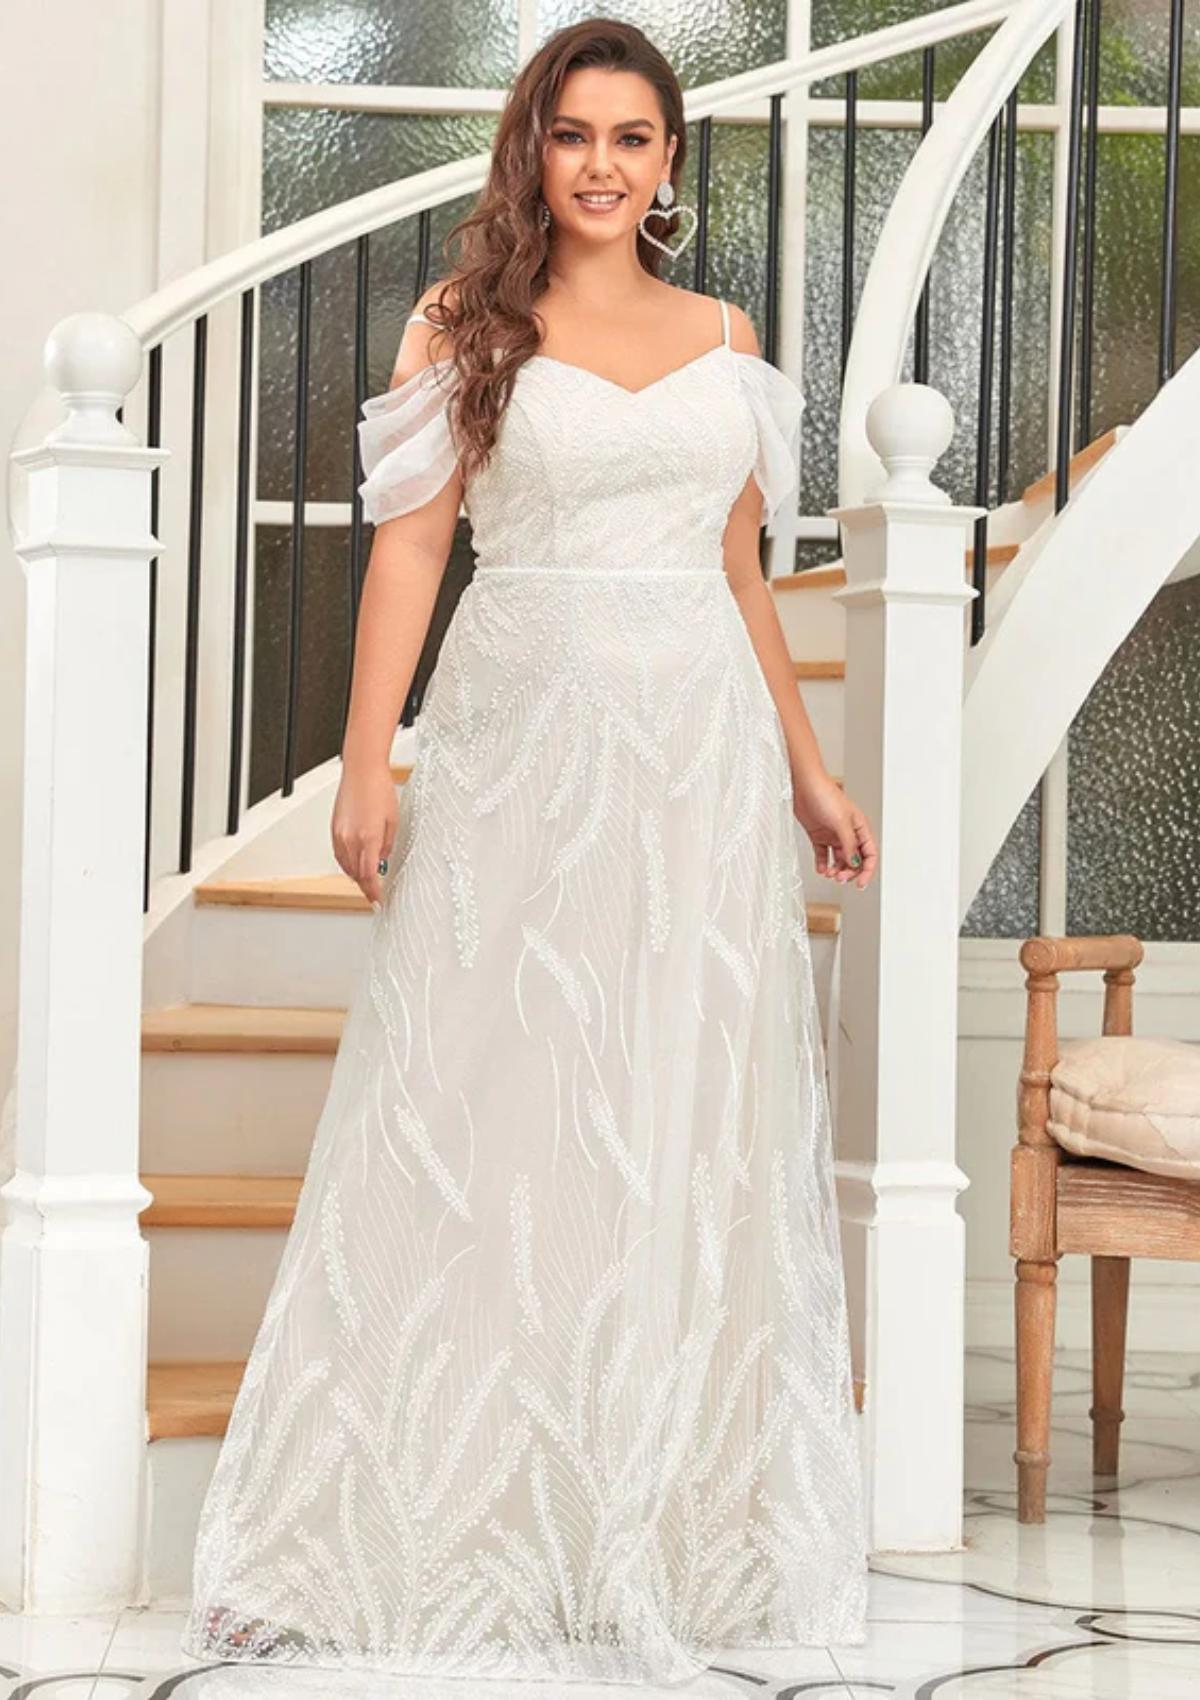 Cute Bride Sandini Bridal Dress from... - UR Bridal Dresses | Facebook